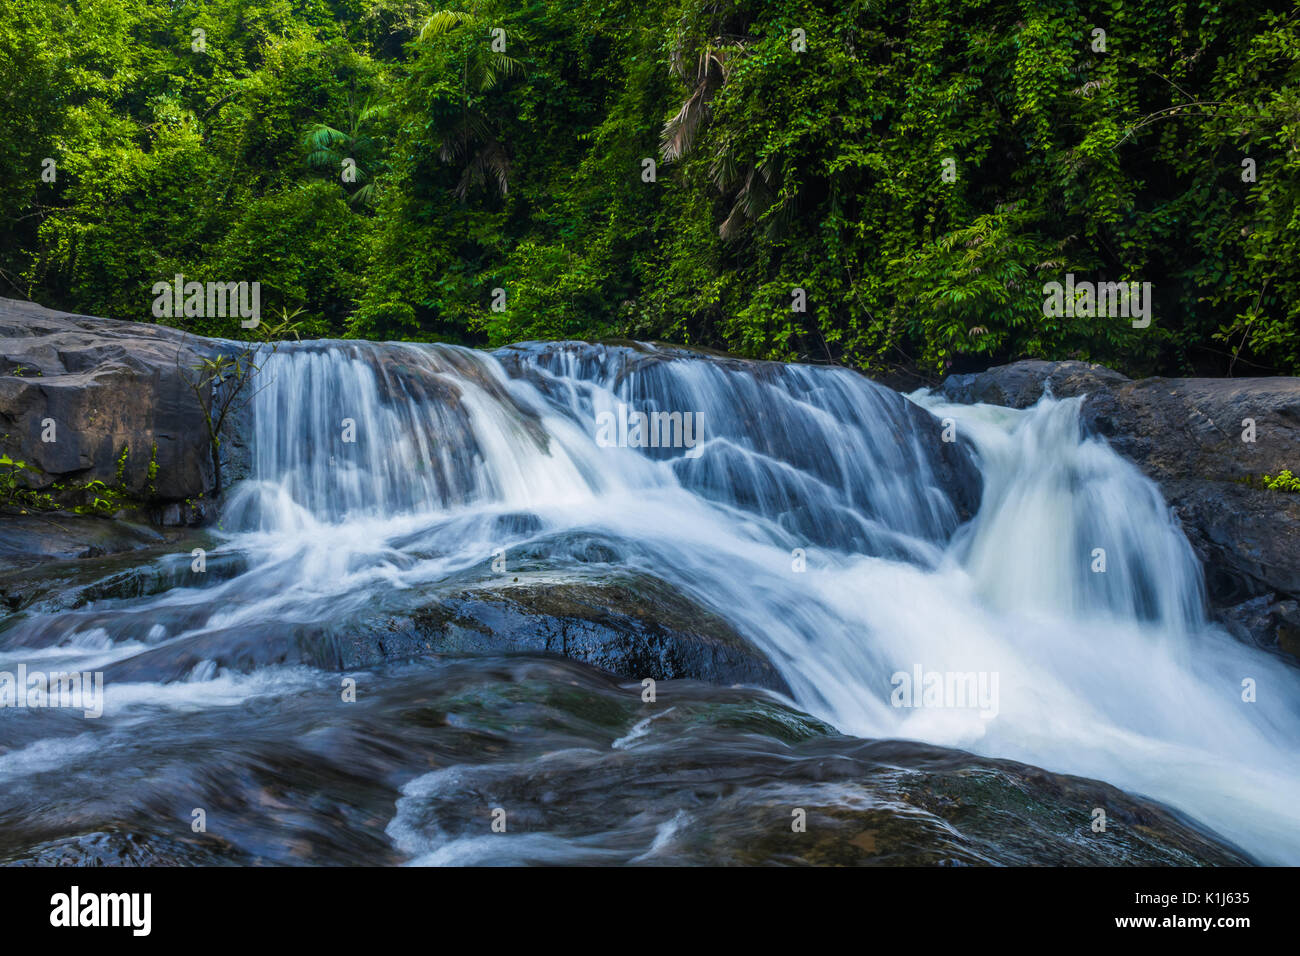 Waters of the Tambdi Surla Waterfall running through the rocks. Stock Photo